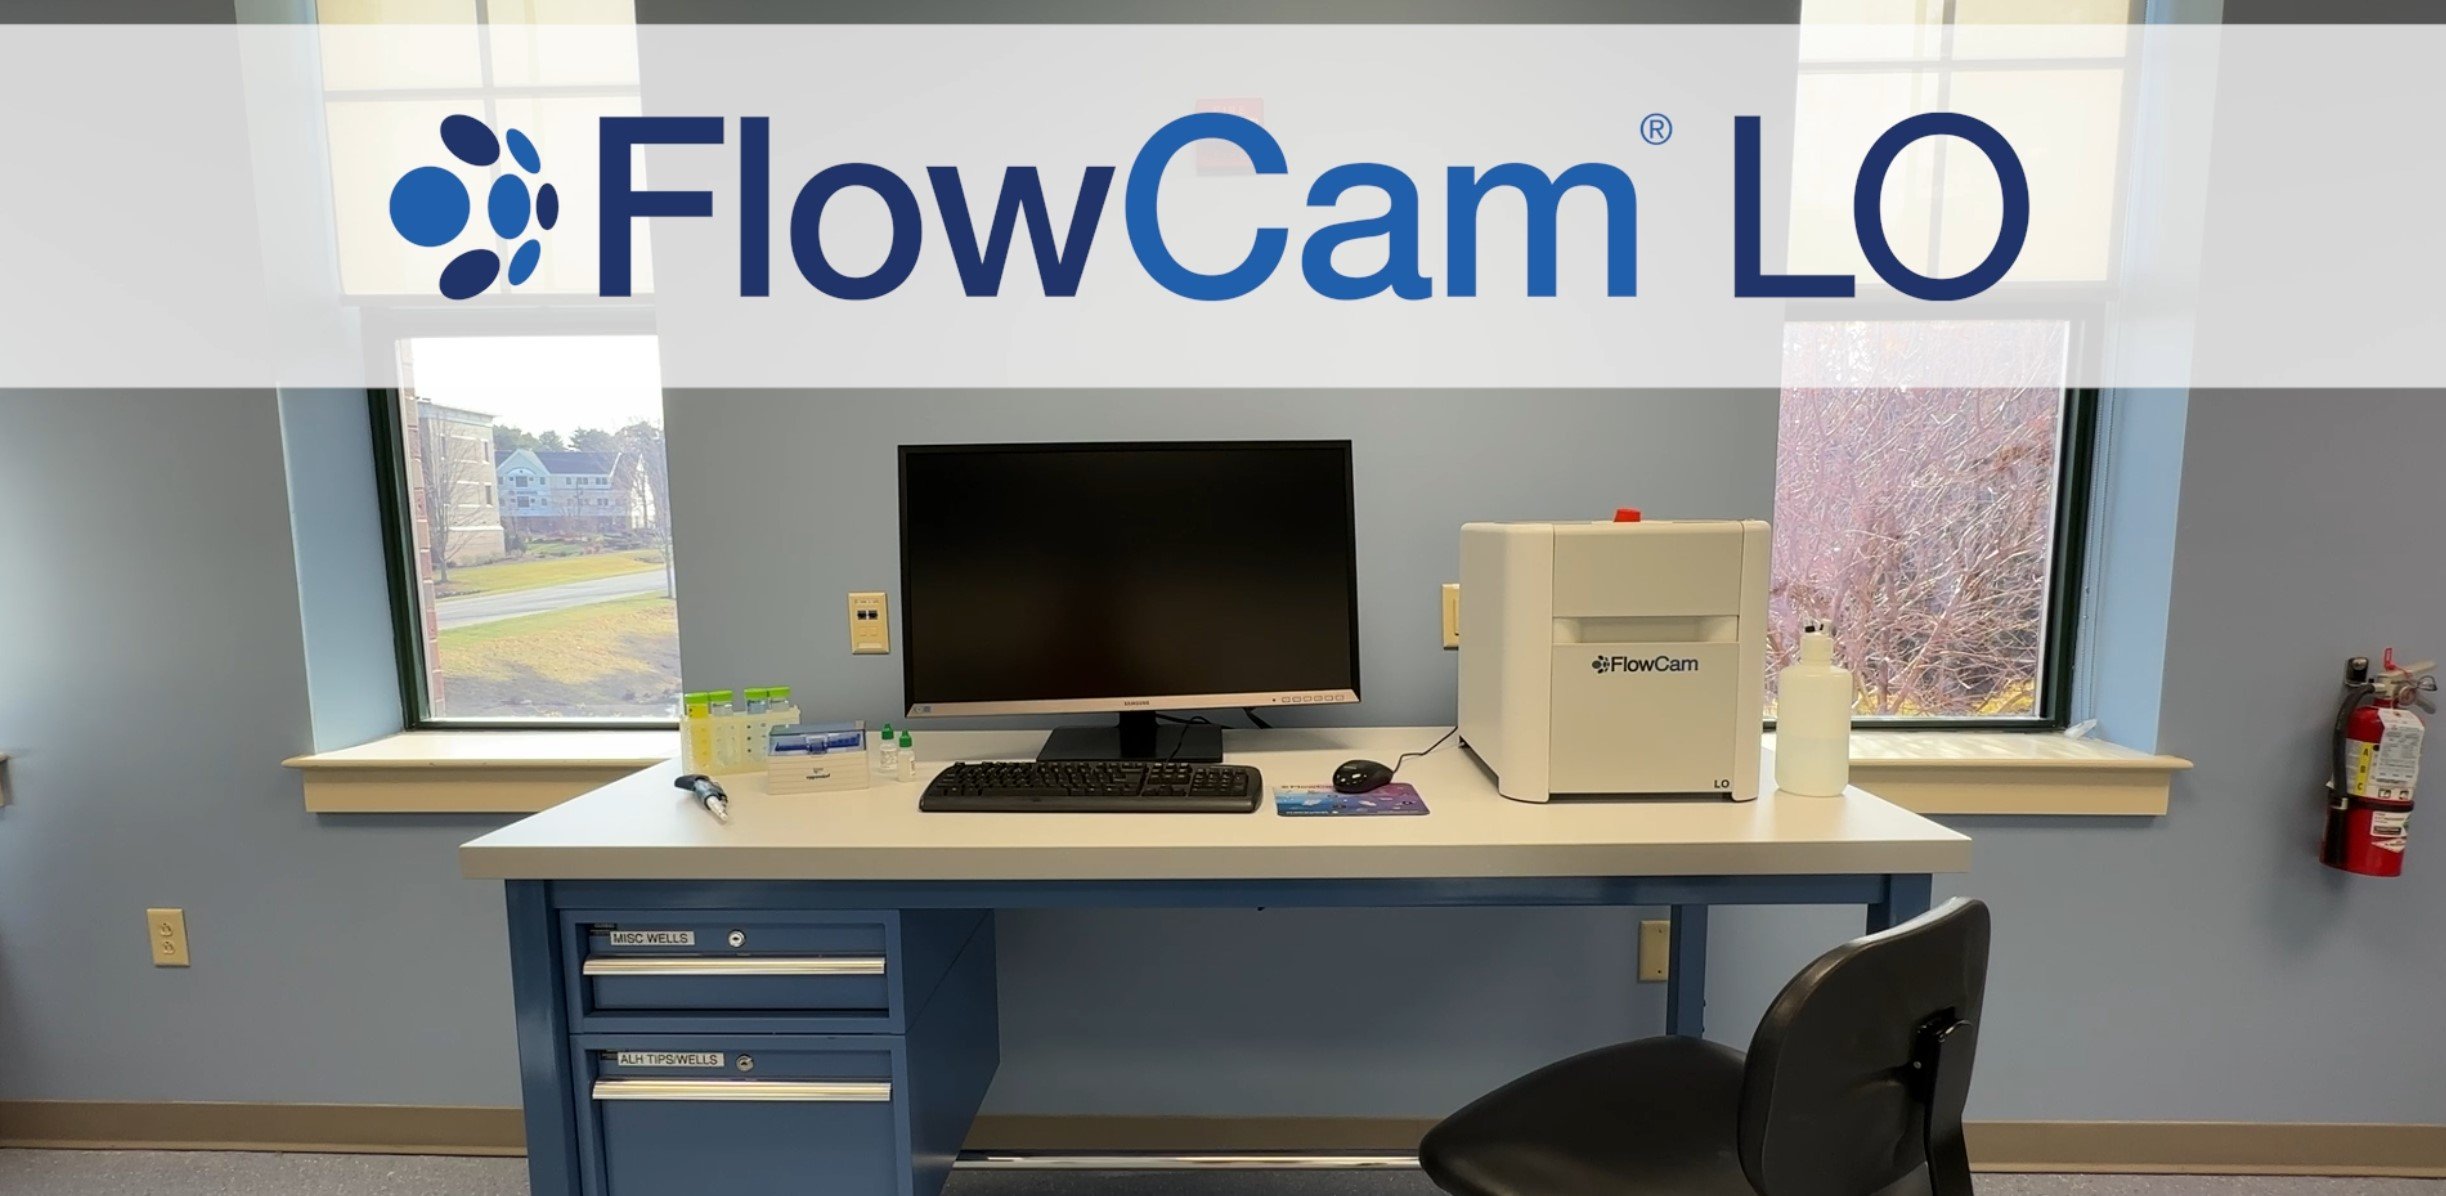 Video title card - FlowCam LO